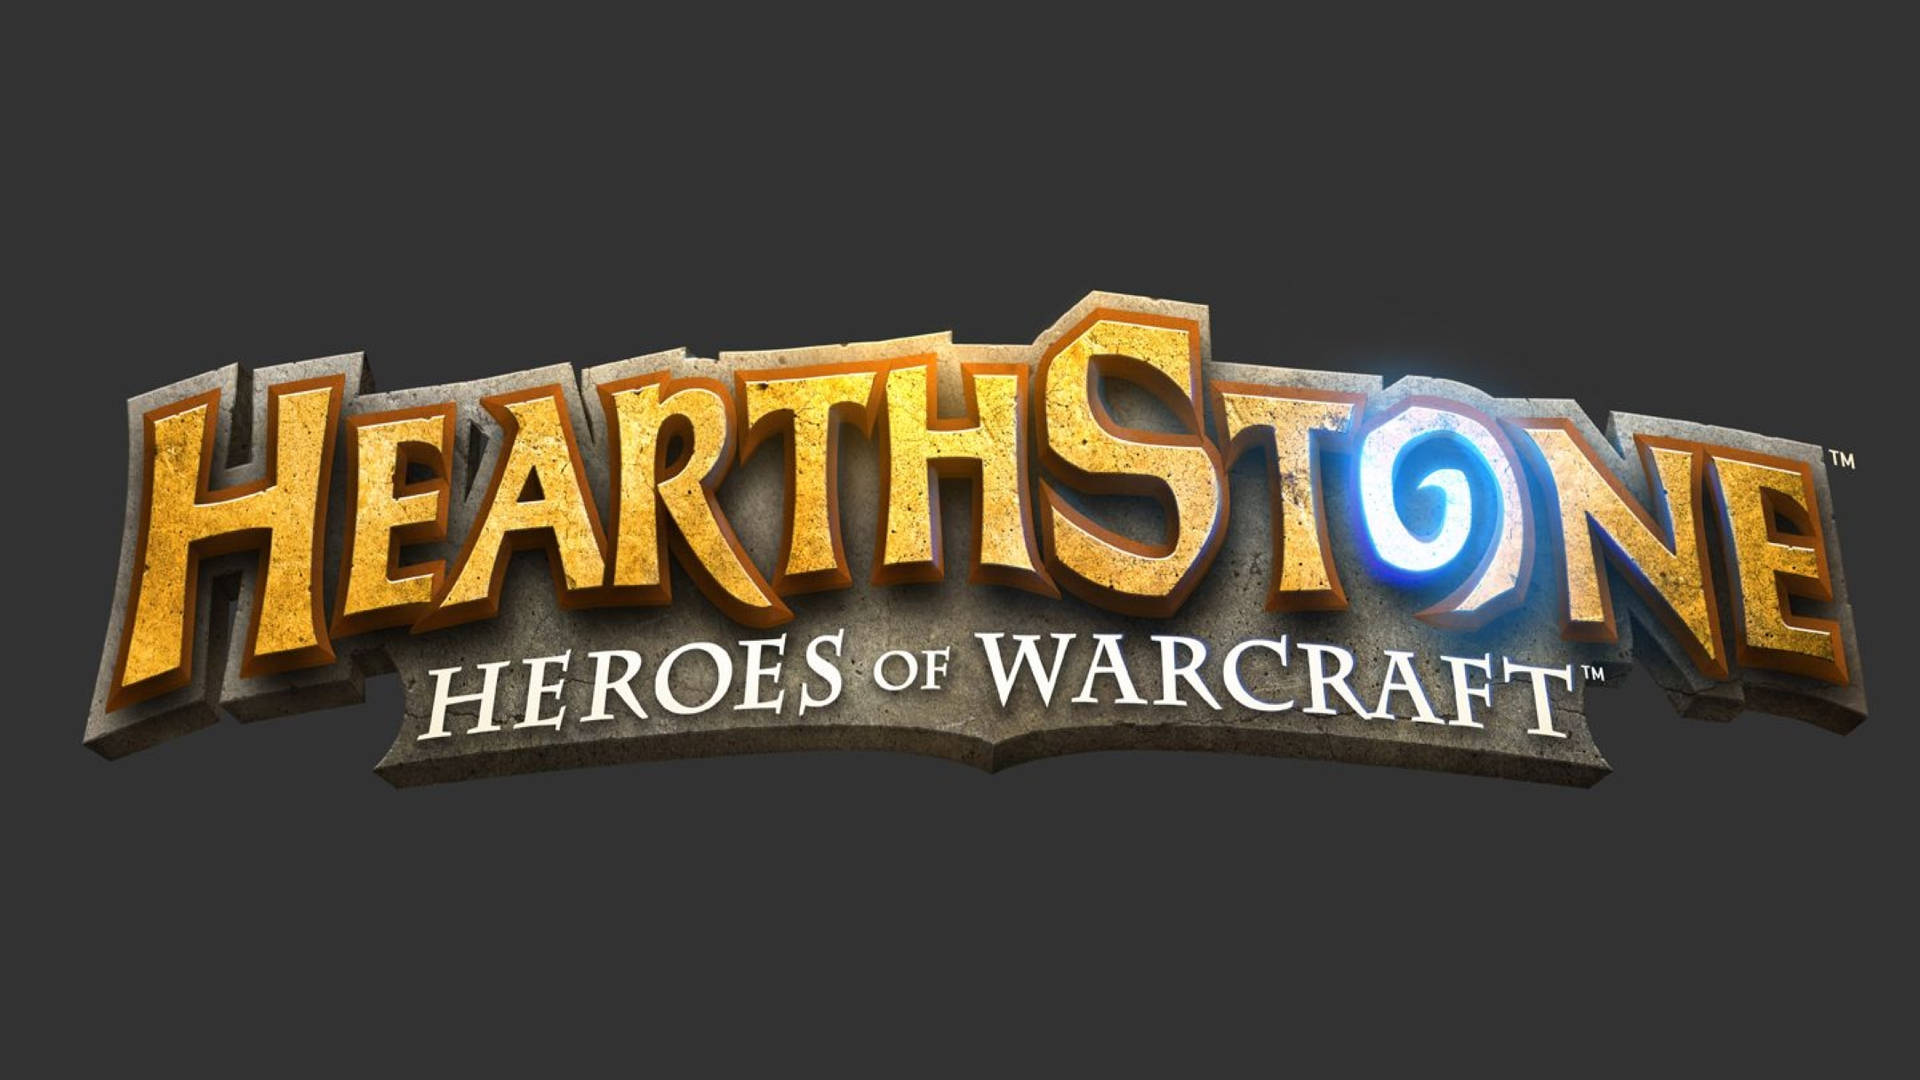 Hearthstone Gaming Logo Wallpaper